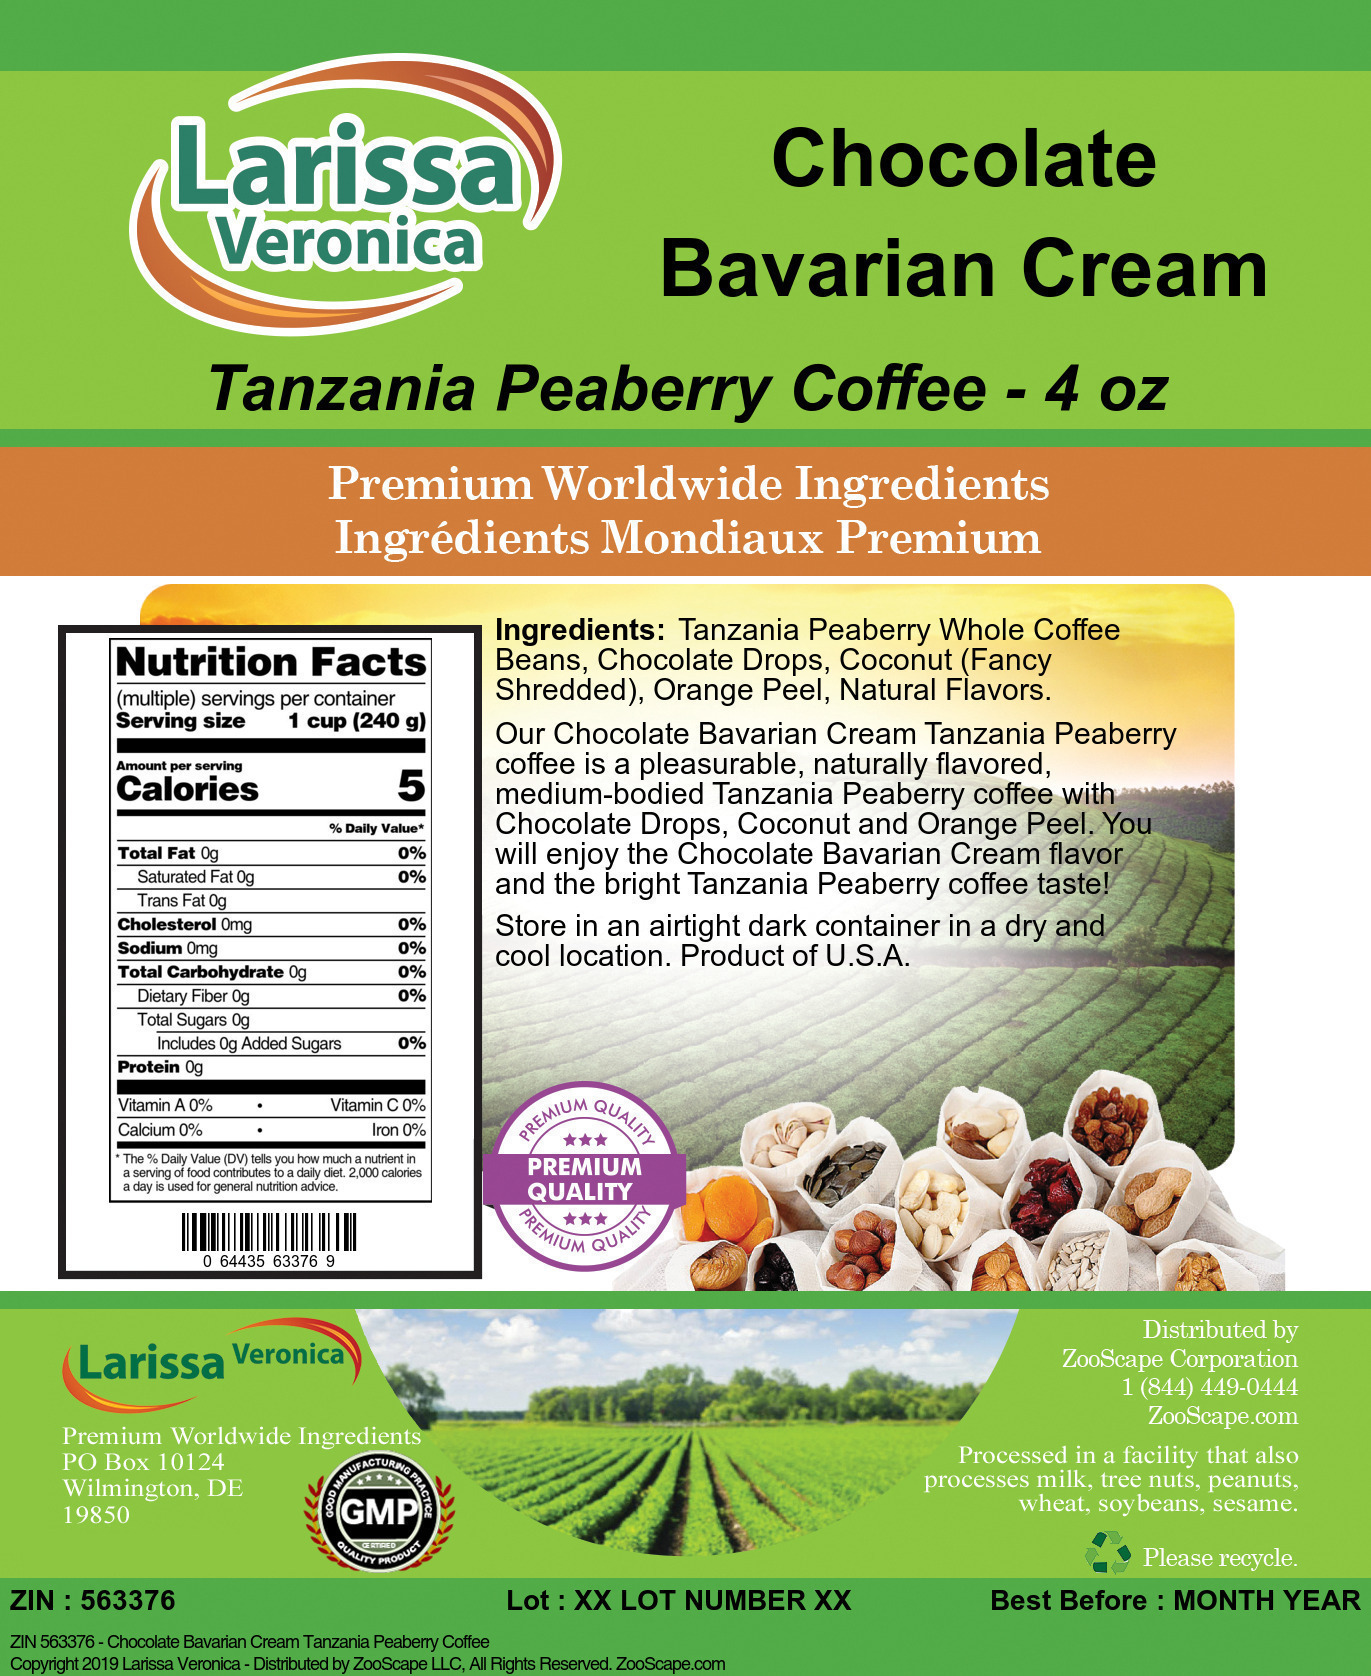 Chocolate Bavarian Cream Tanzania Peaberry Coffee - Label